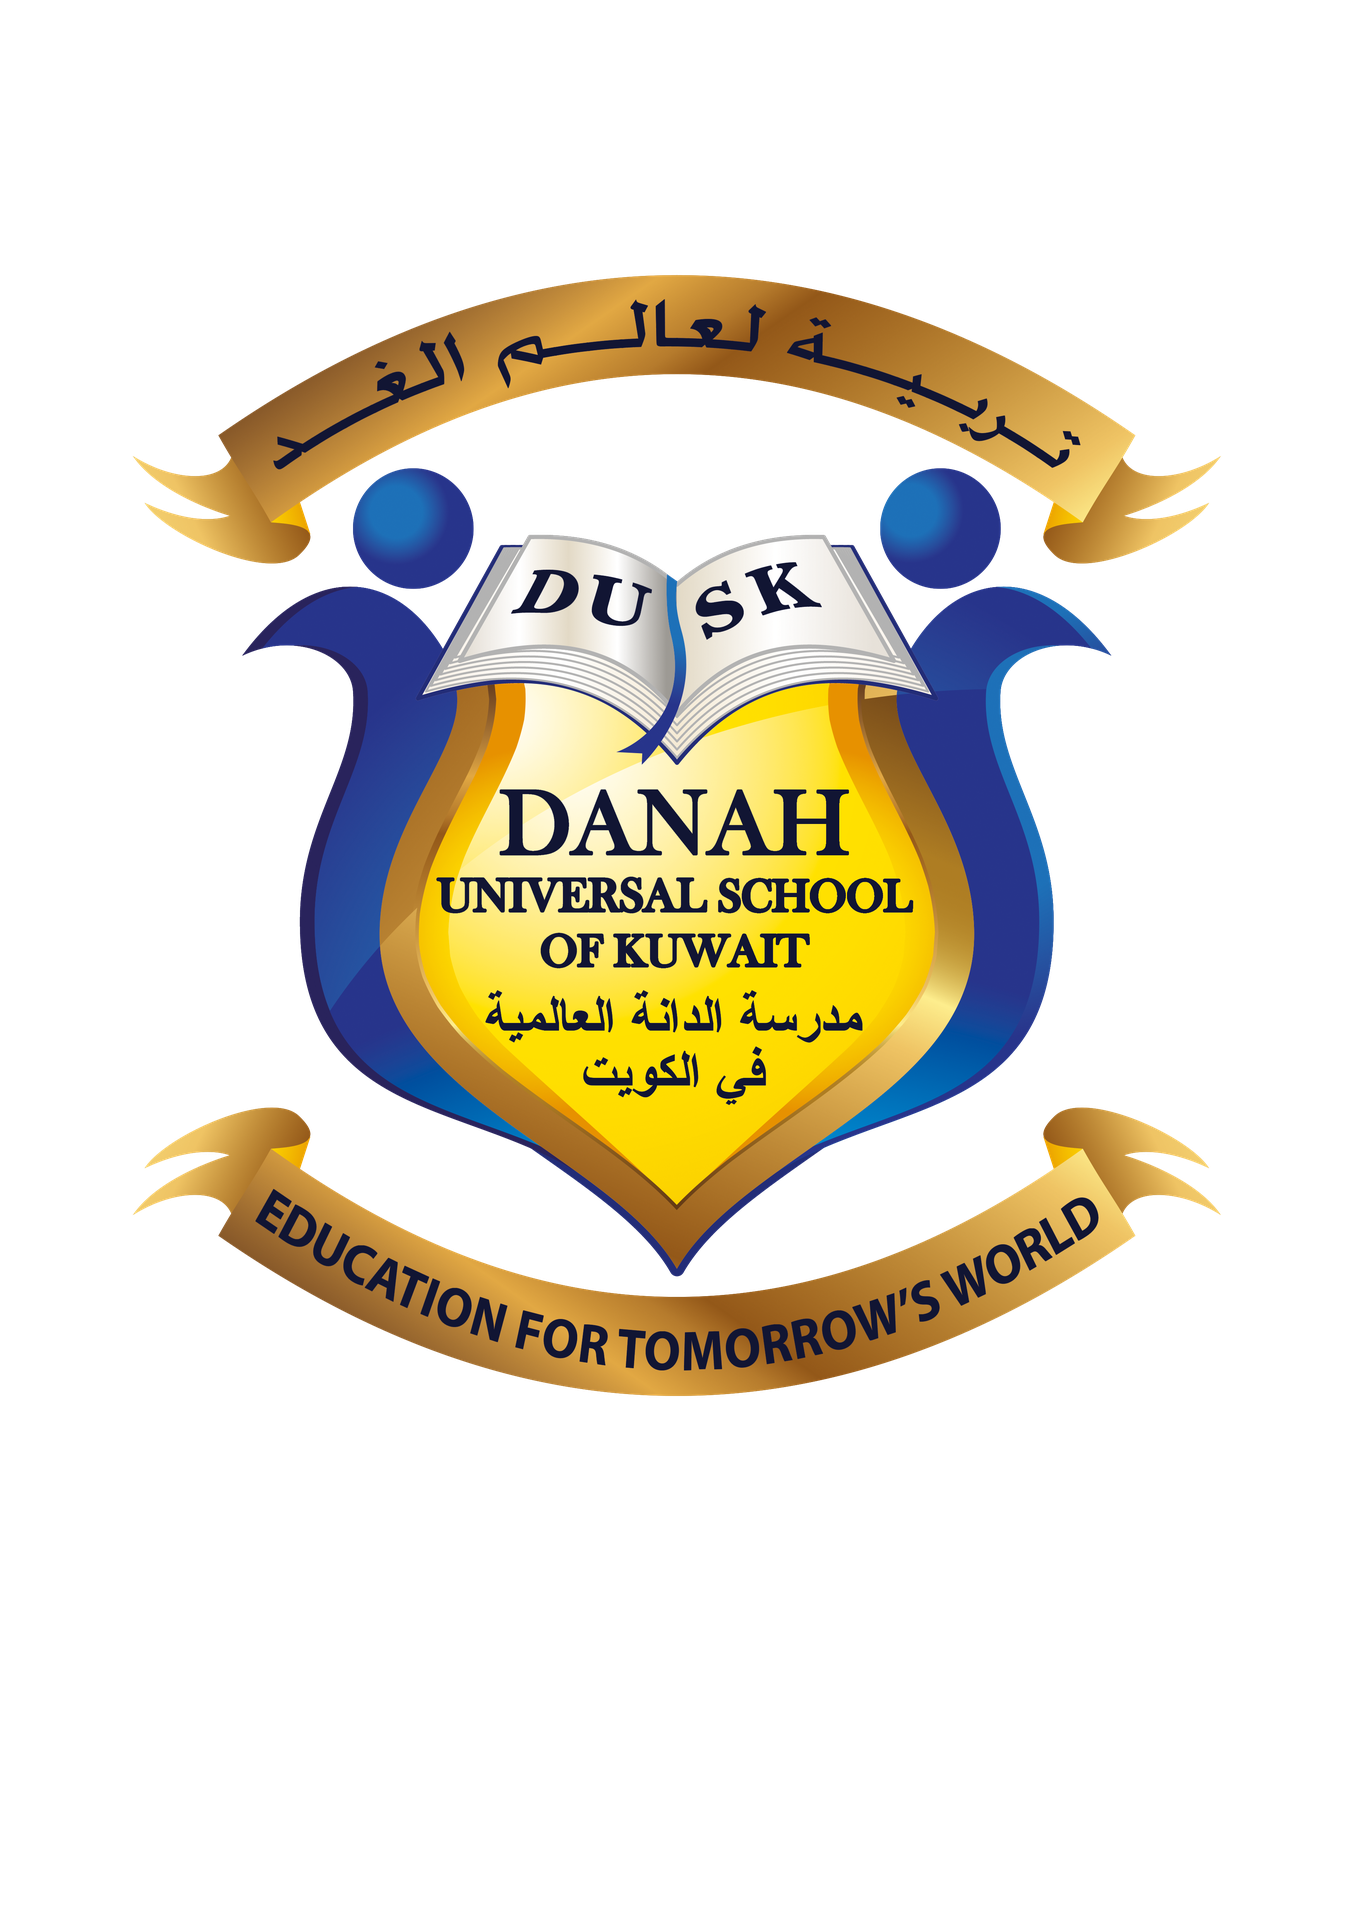 Danah Universal School of Kuwait